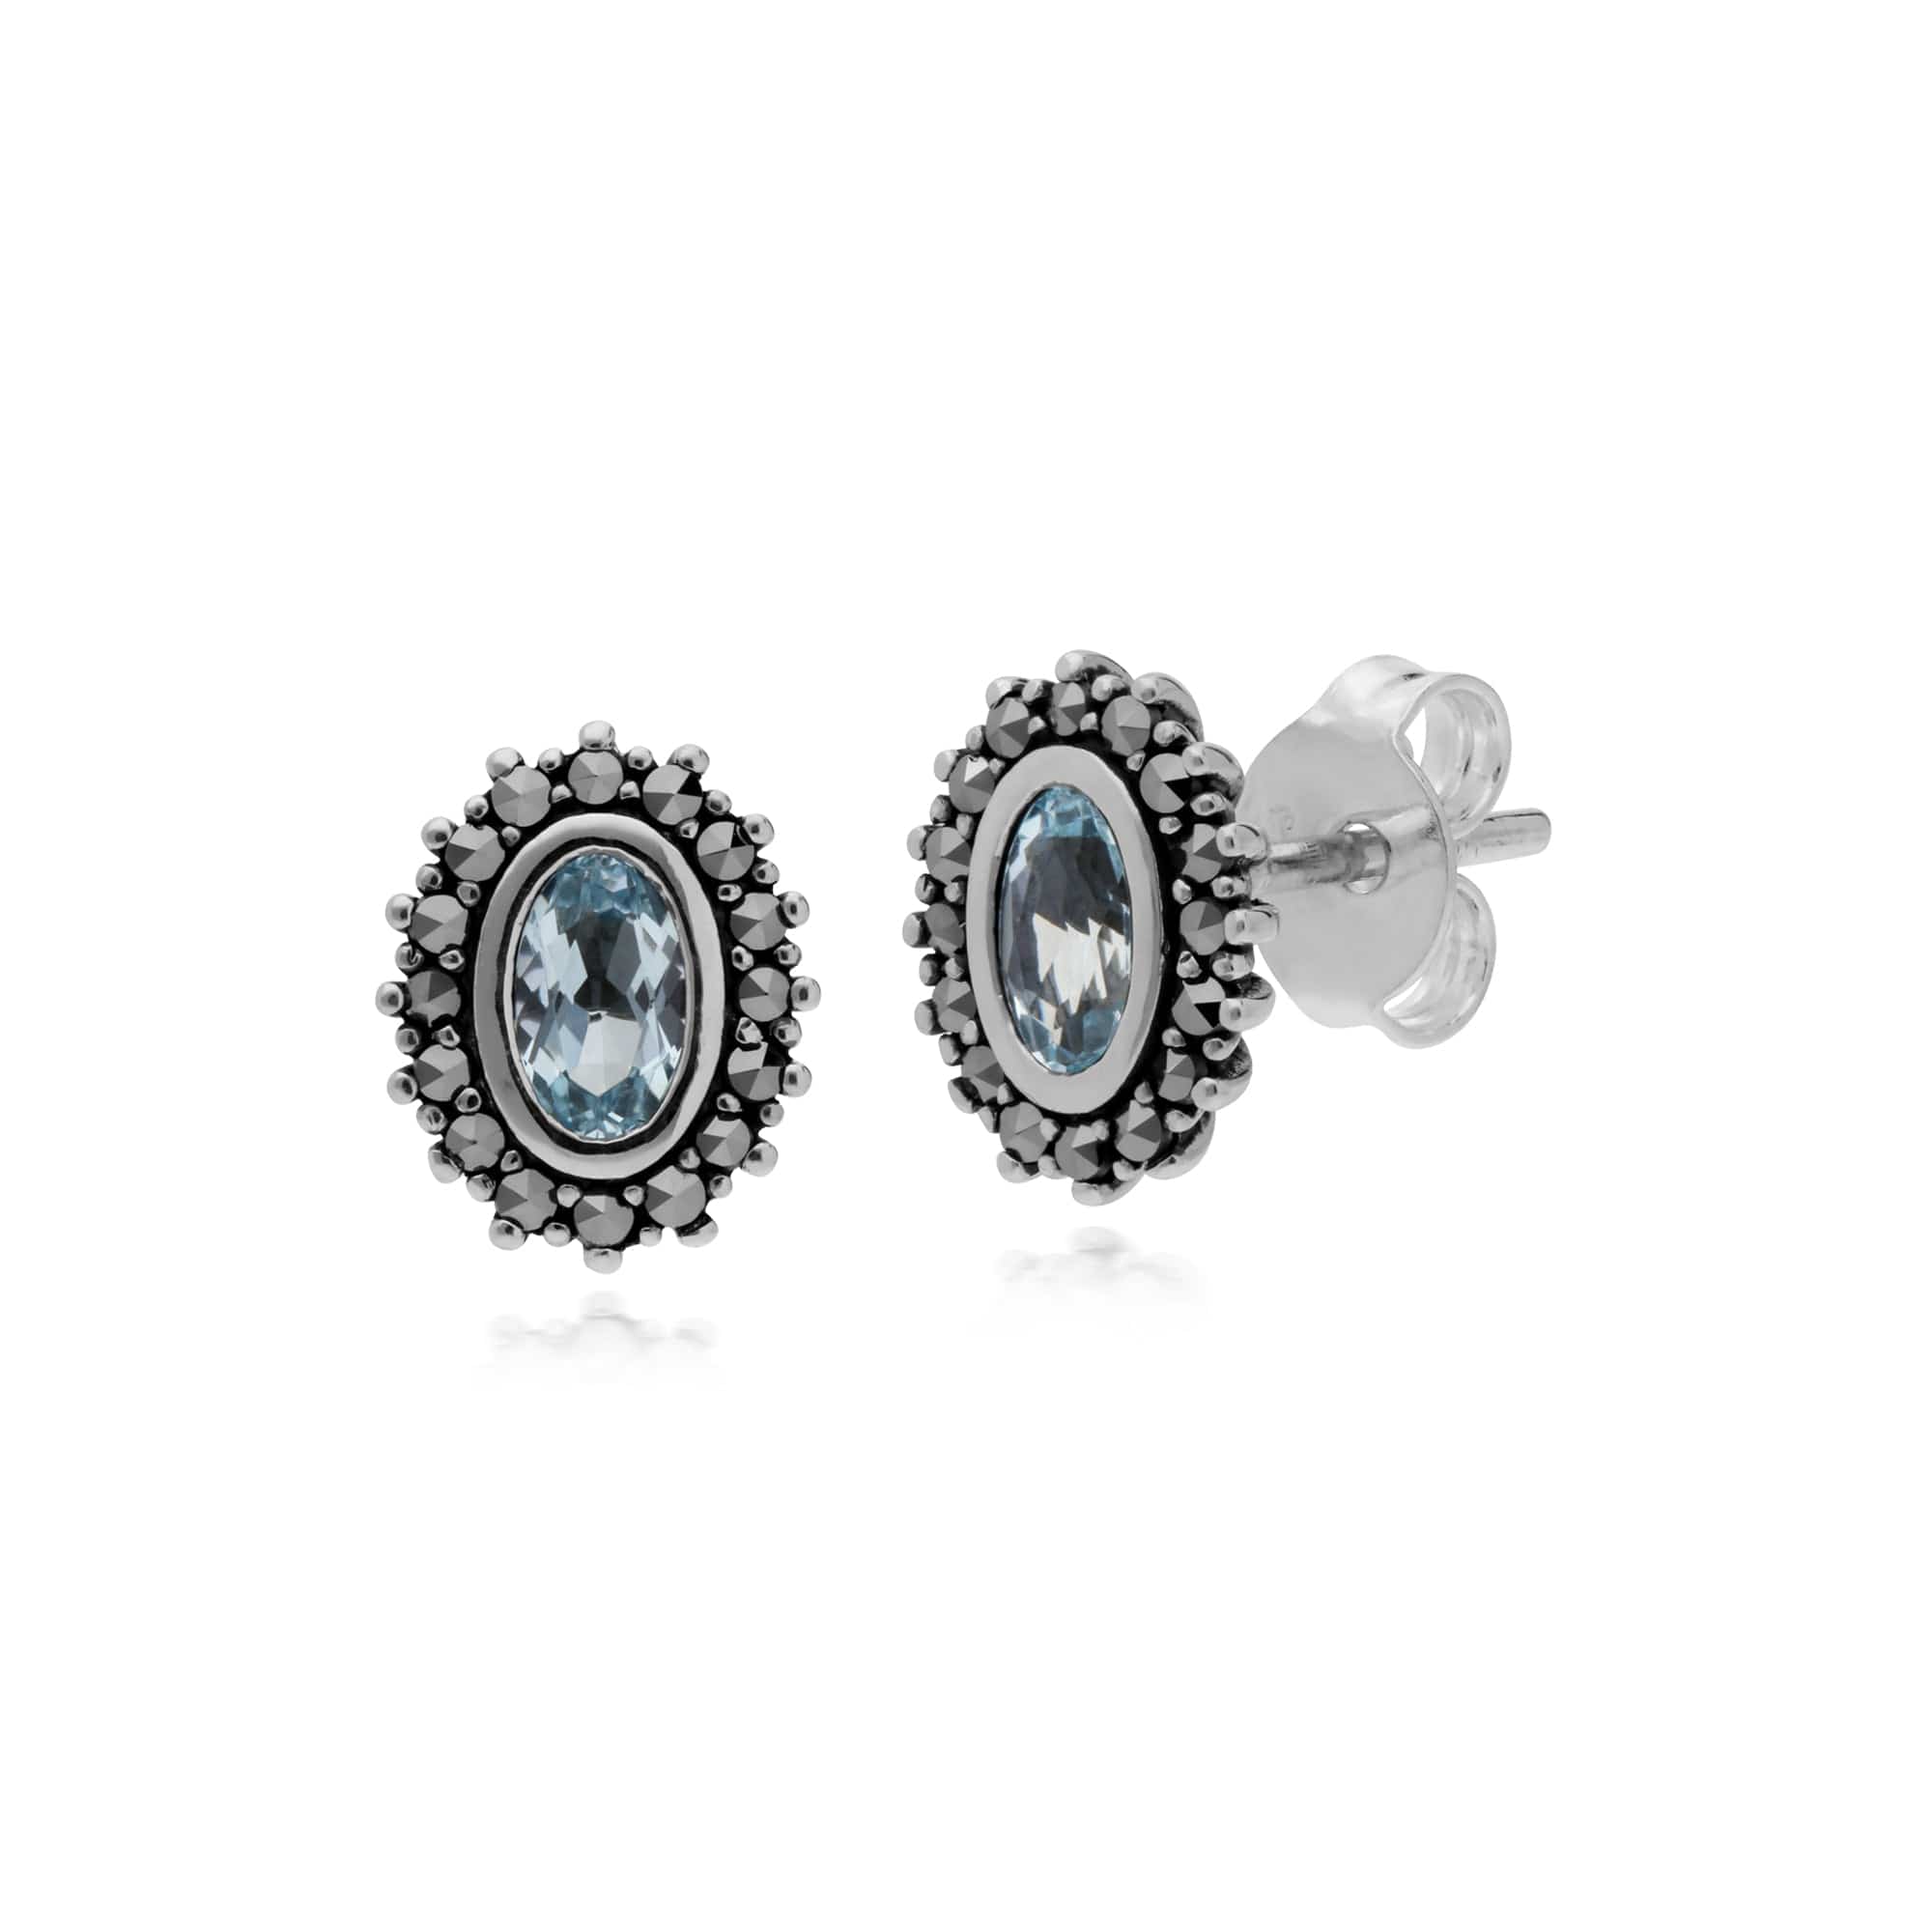 214E860901925-214P301401925 Art Deco Style Oval Blue Topaz & Marcasite Halo Stud Earrings & Pendant Set in 925 Sterling Silver 2